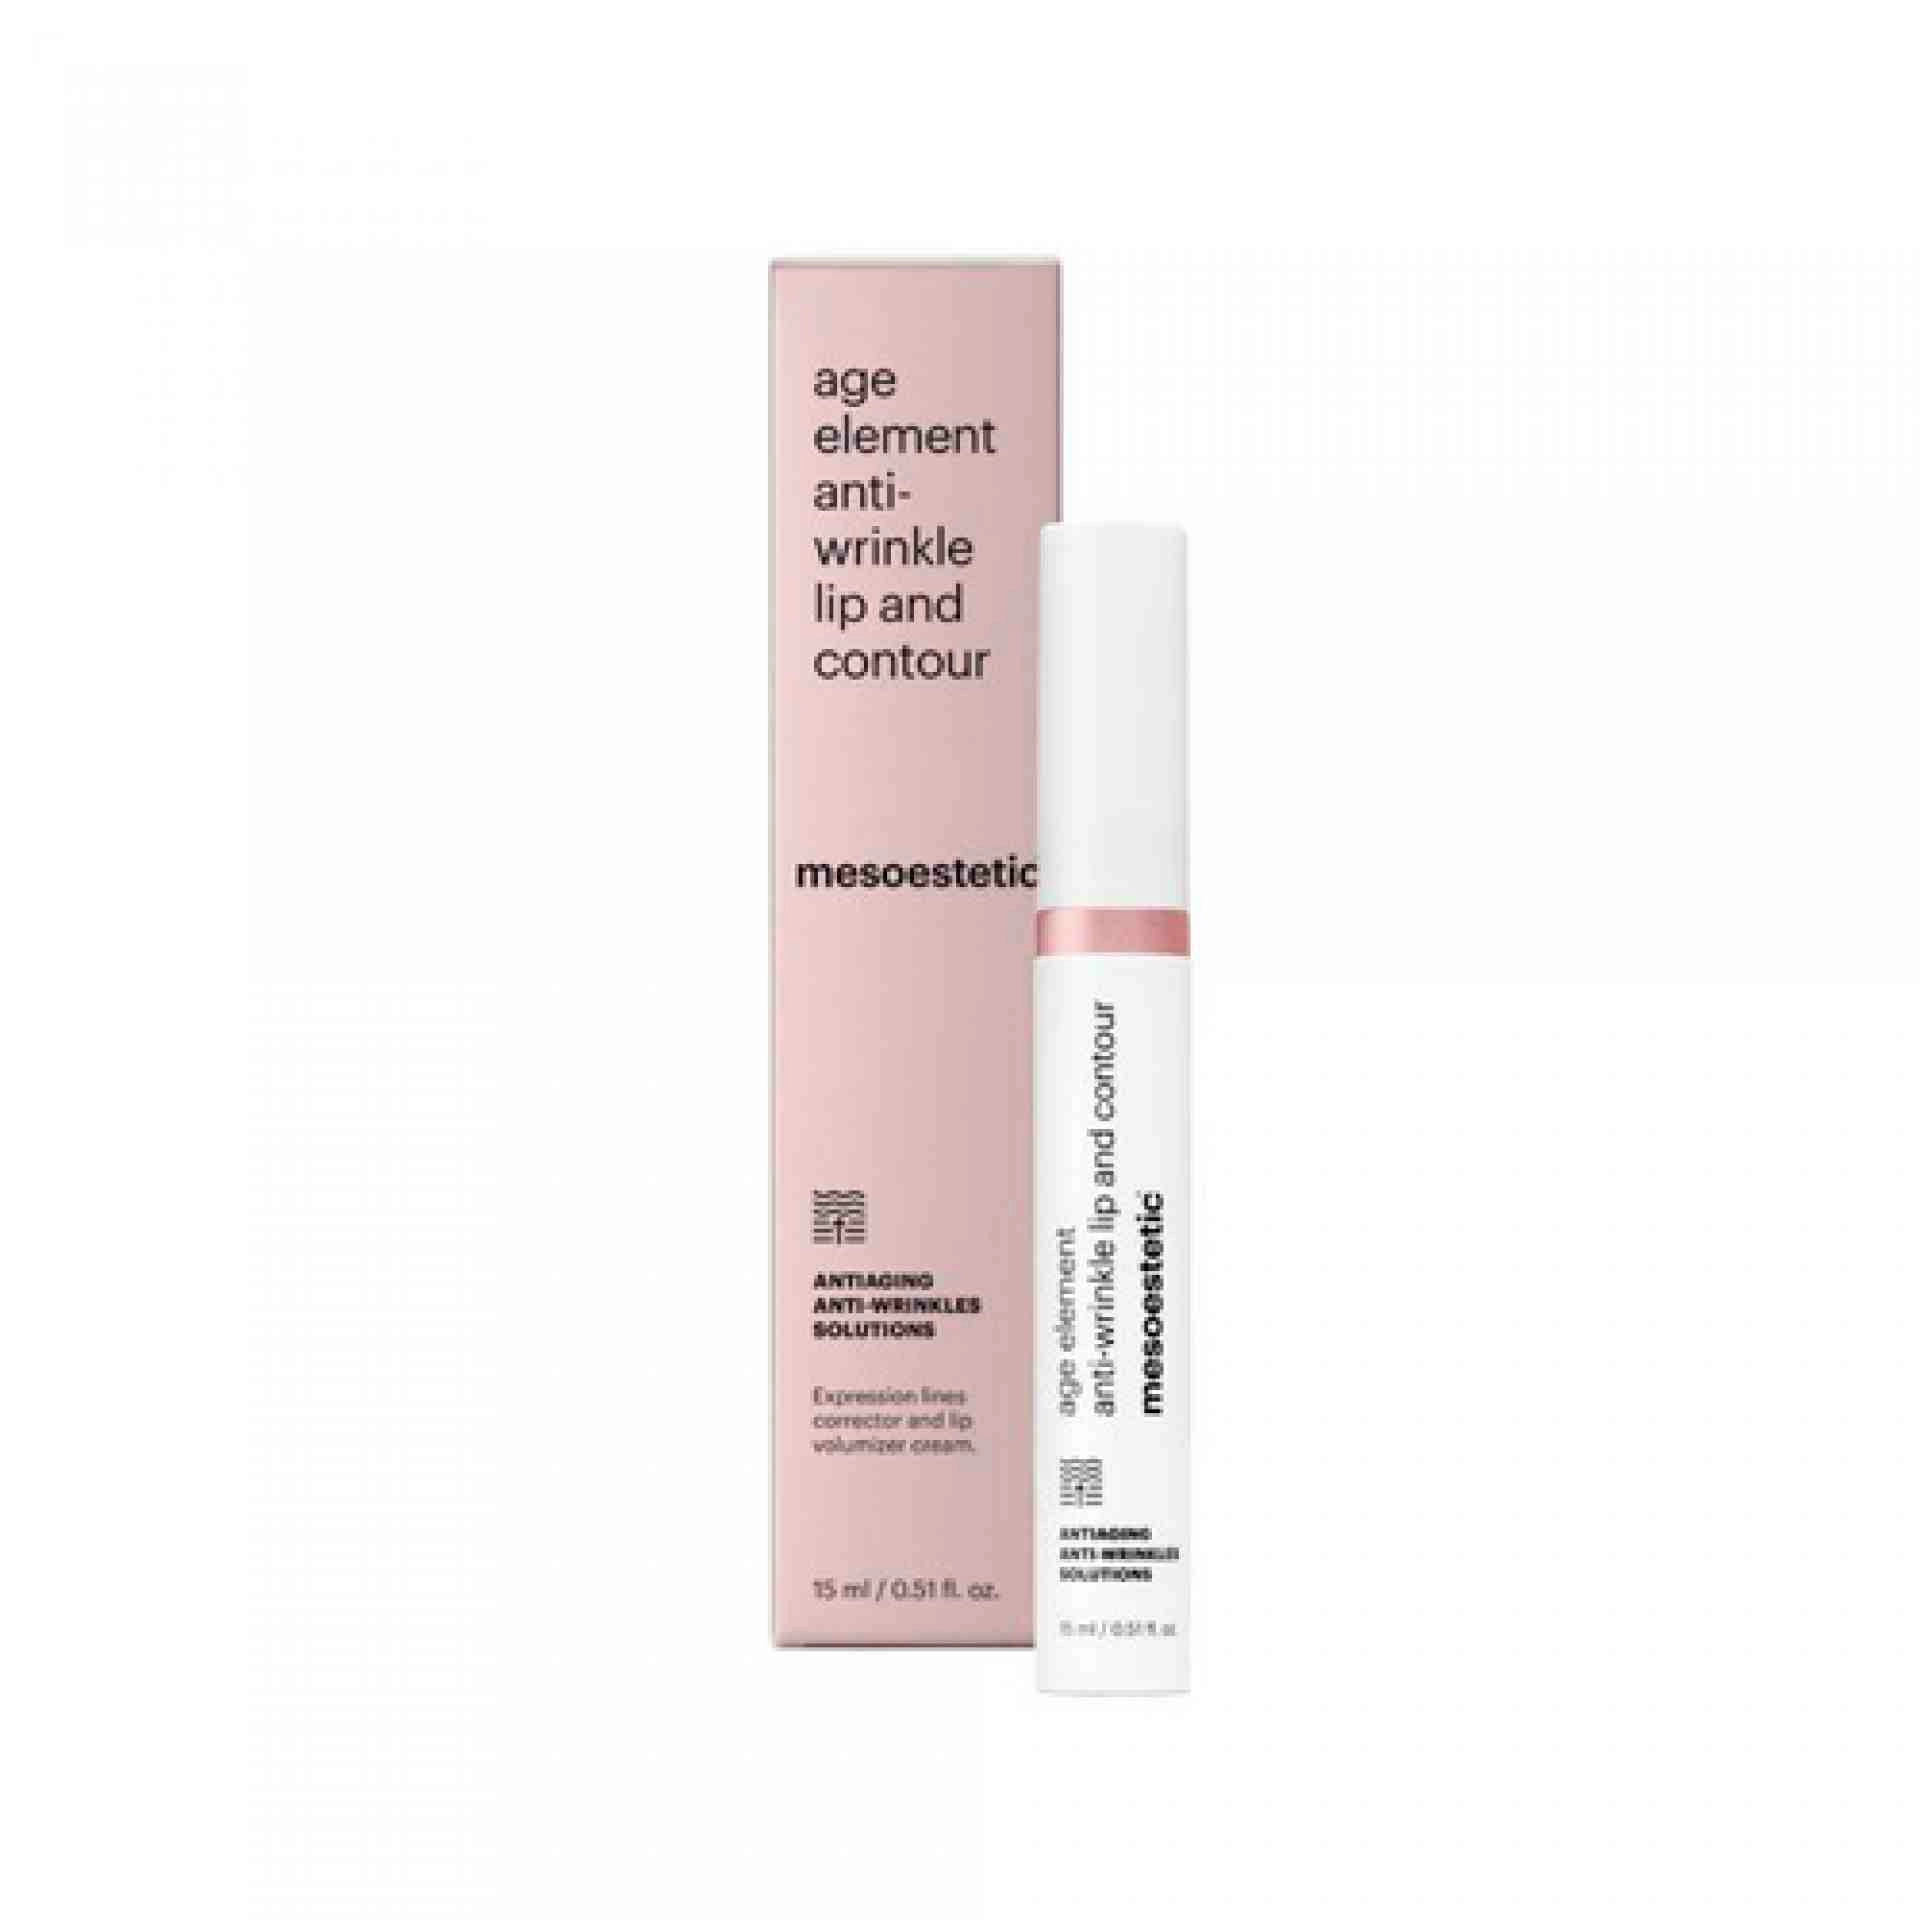 age element anti-wrinkle lip & contour | contorno de labios 15ml - antiaging antiwrinkles solutions - mesoestetic ®